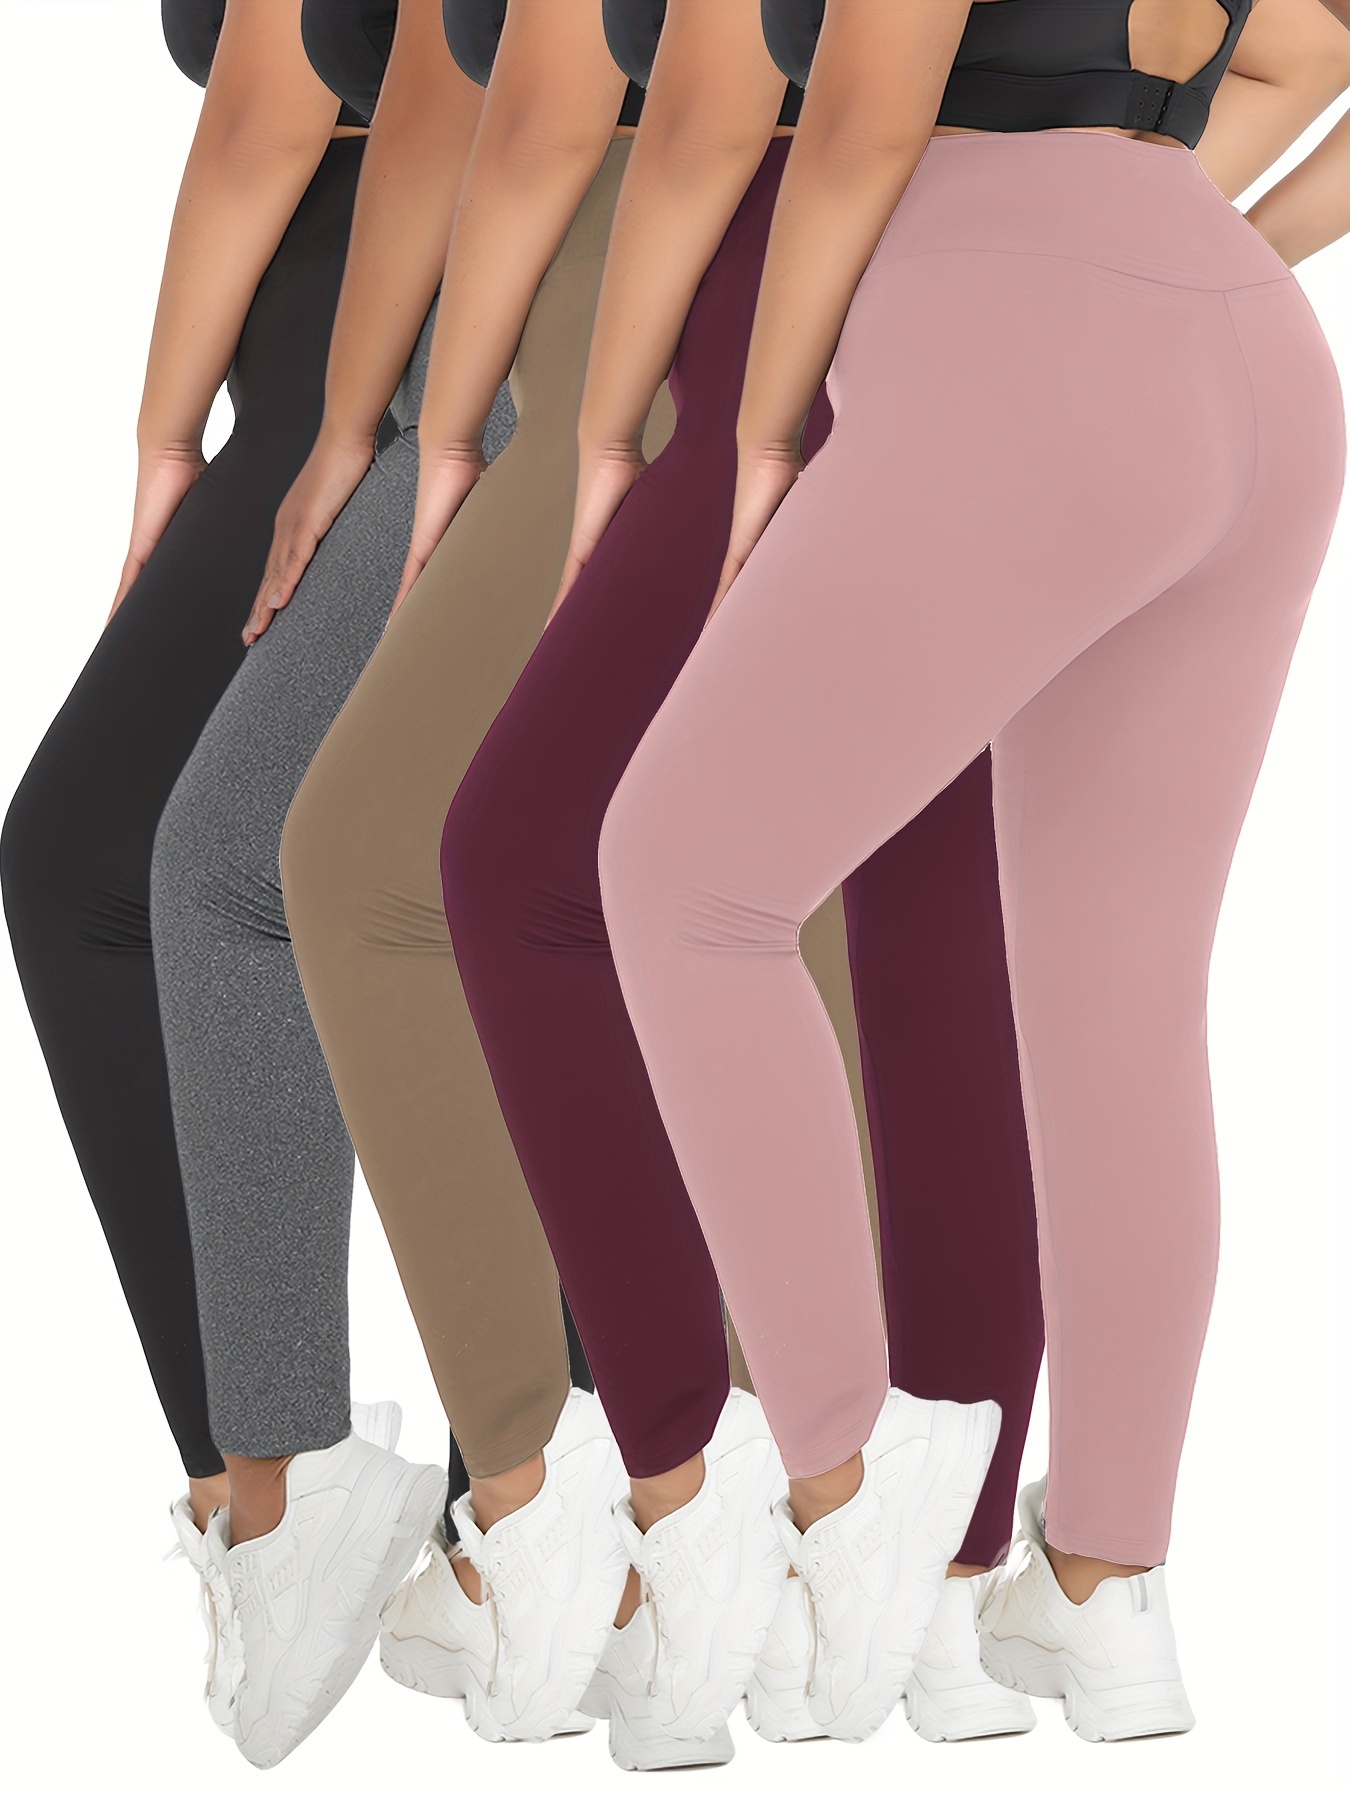 Plus Size 5pcs/Pack Women's High-Waist Pocket Yoga Pants, Soft And